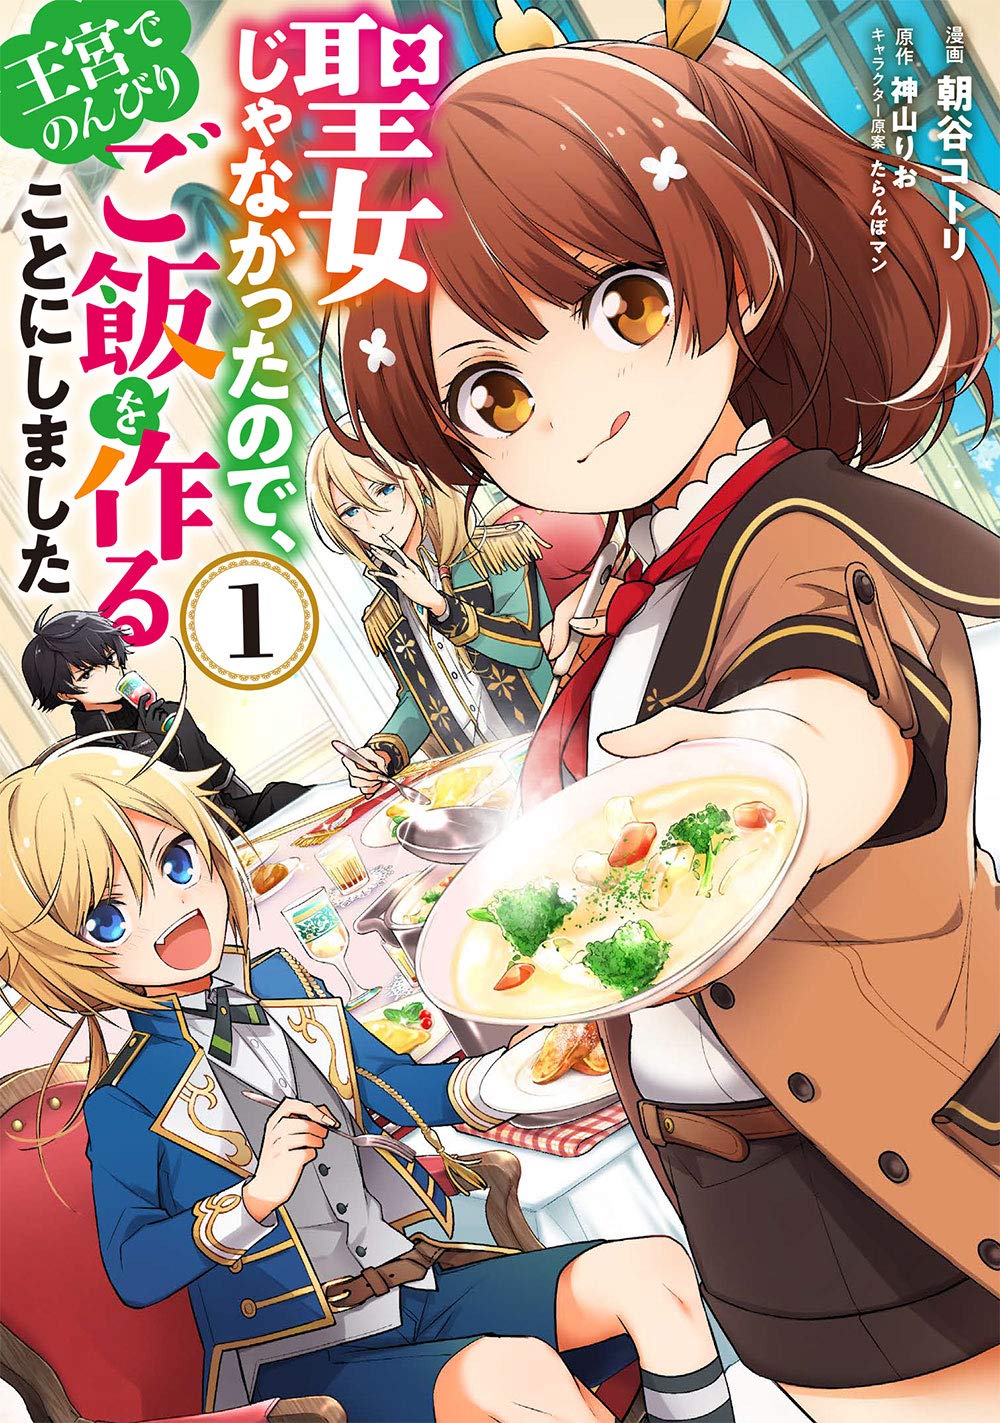 I'm Not the Saint, so I'll Just Leisurely Make Food at the Royal Palace Manga